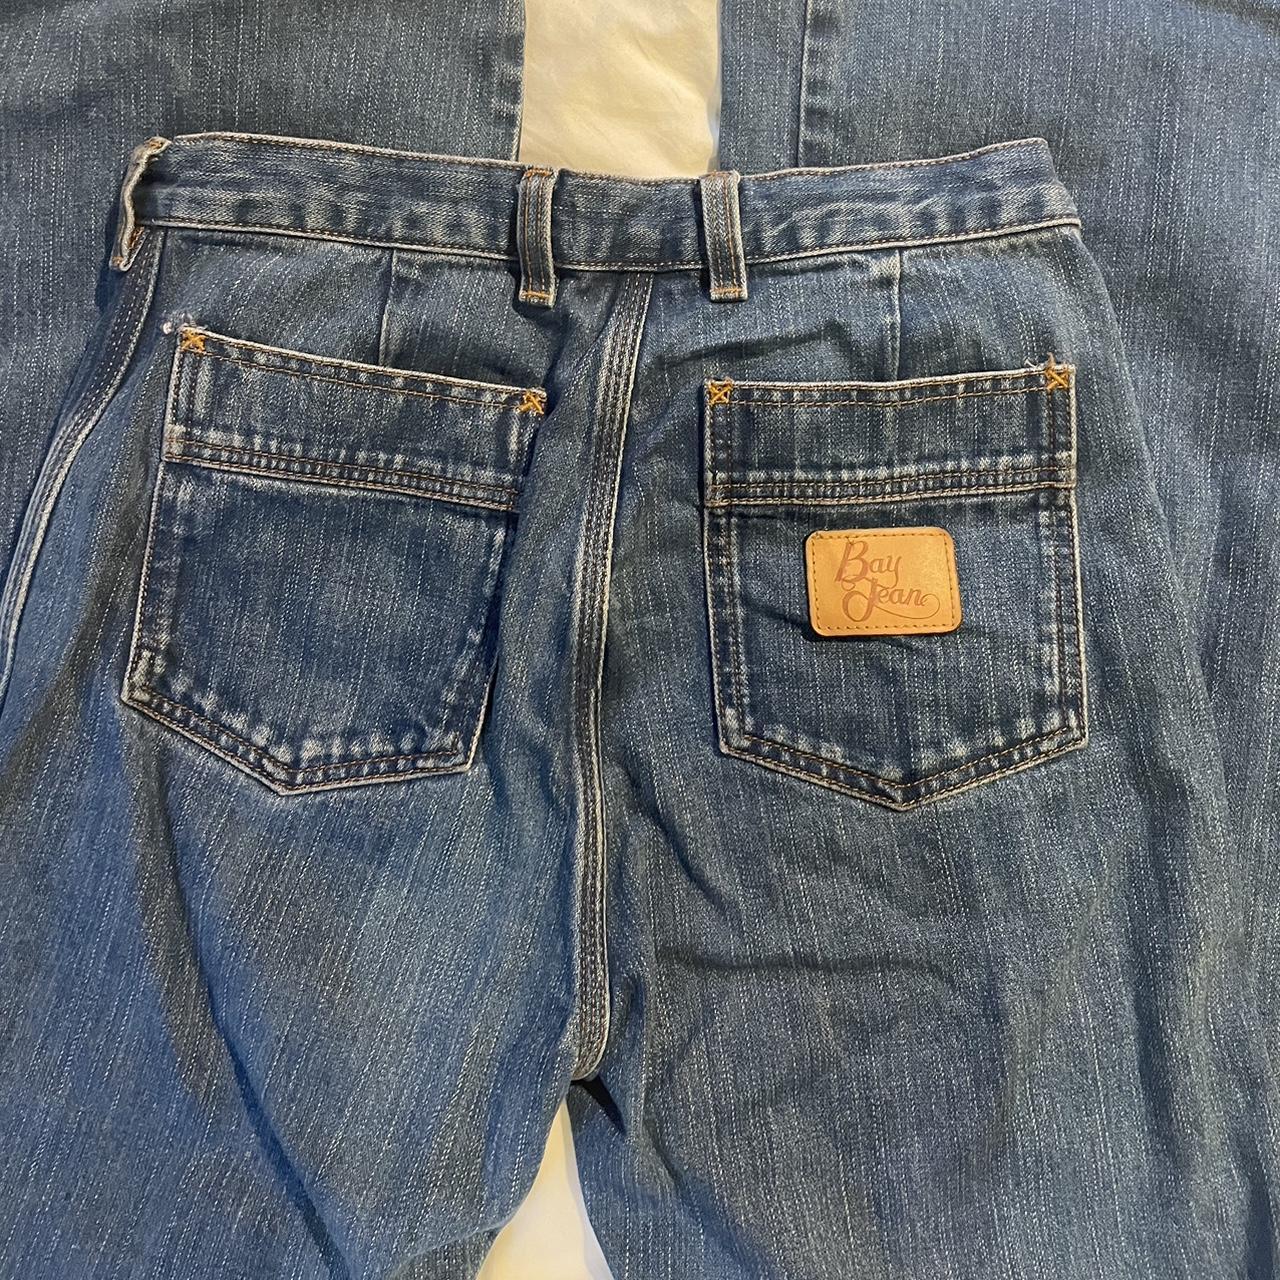 MIH ‘Bay’ jeans Limited edition Goldbourne Road... - Depop